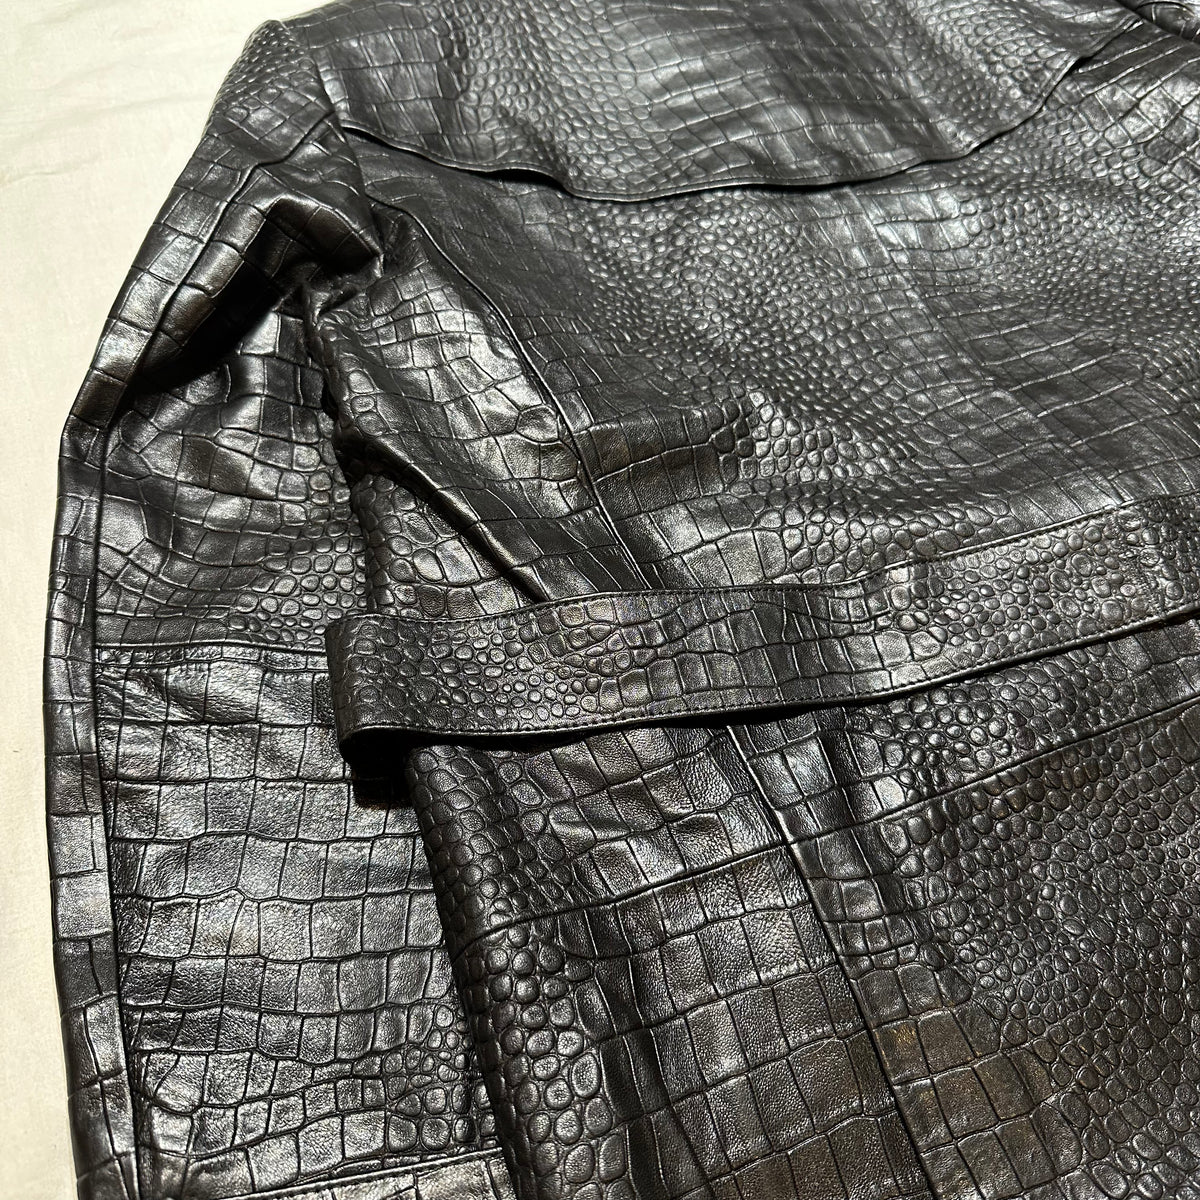 Kashani Black Embossed Alligator Lambskin Leather Trench Coat GHJ - Dudes Boutique